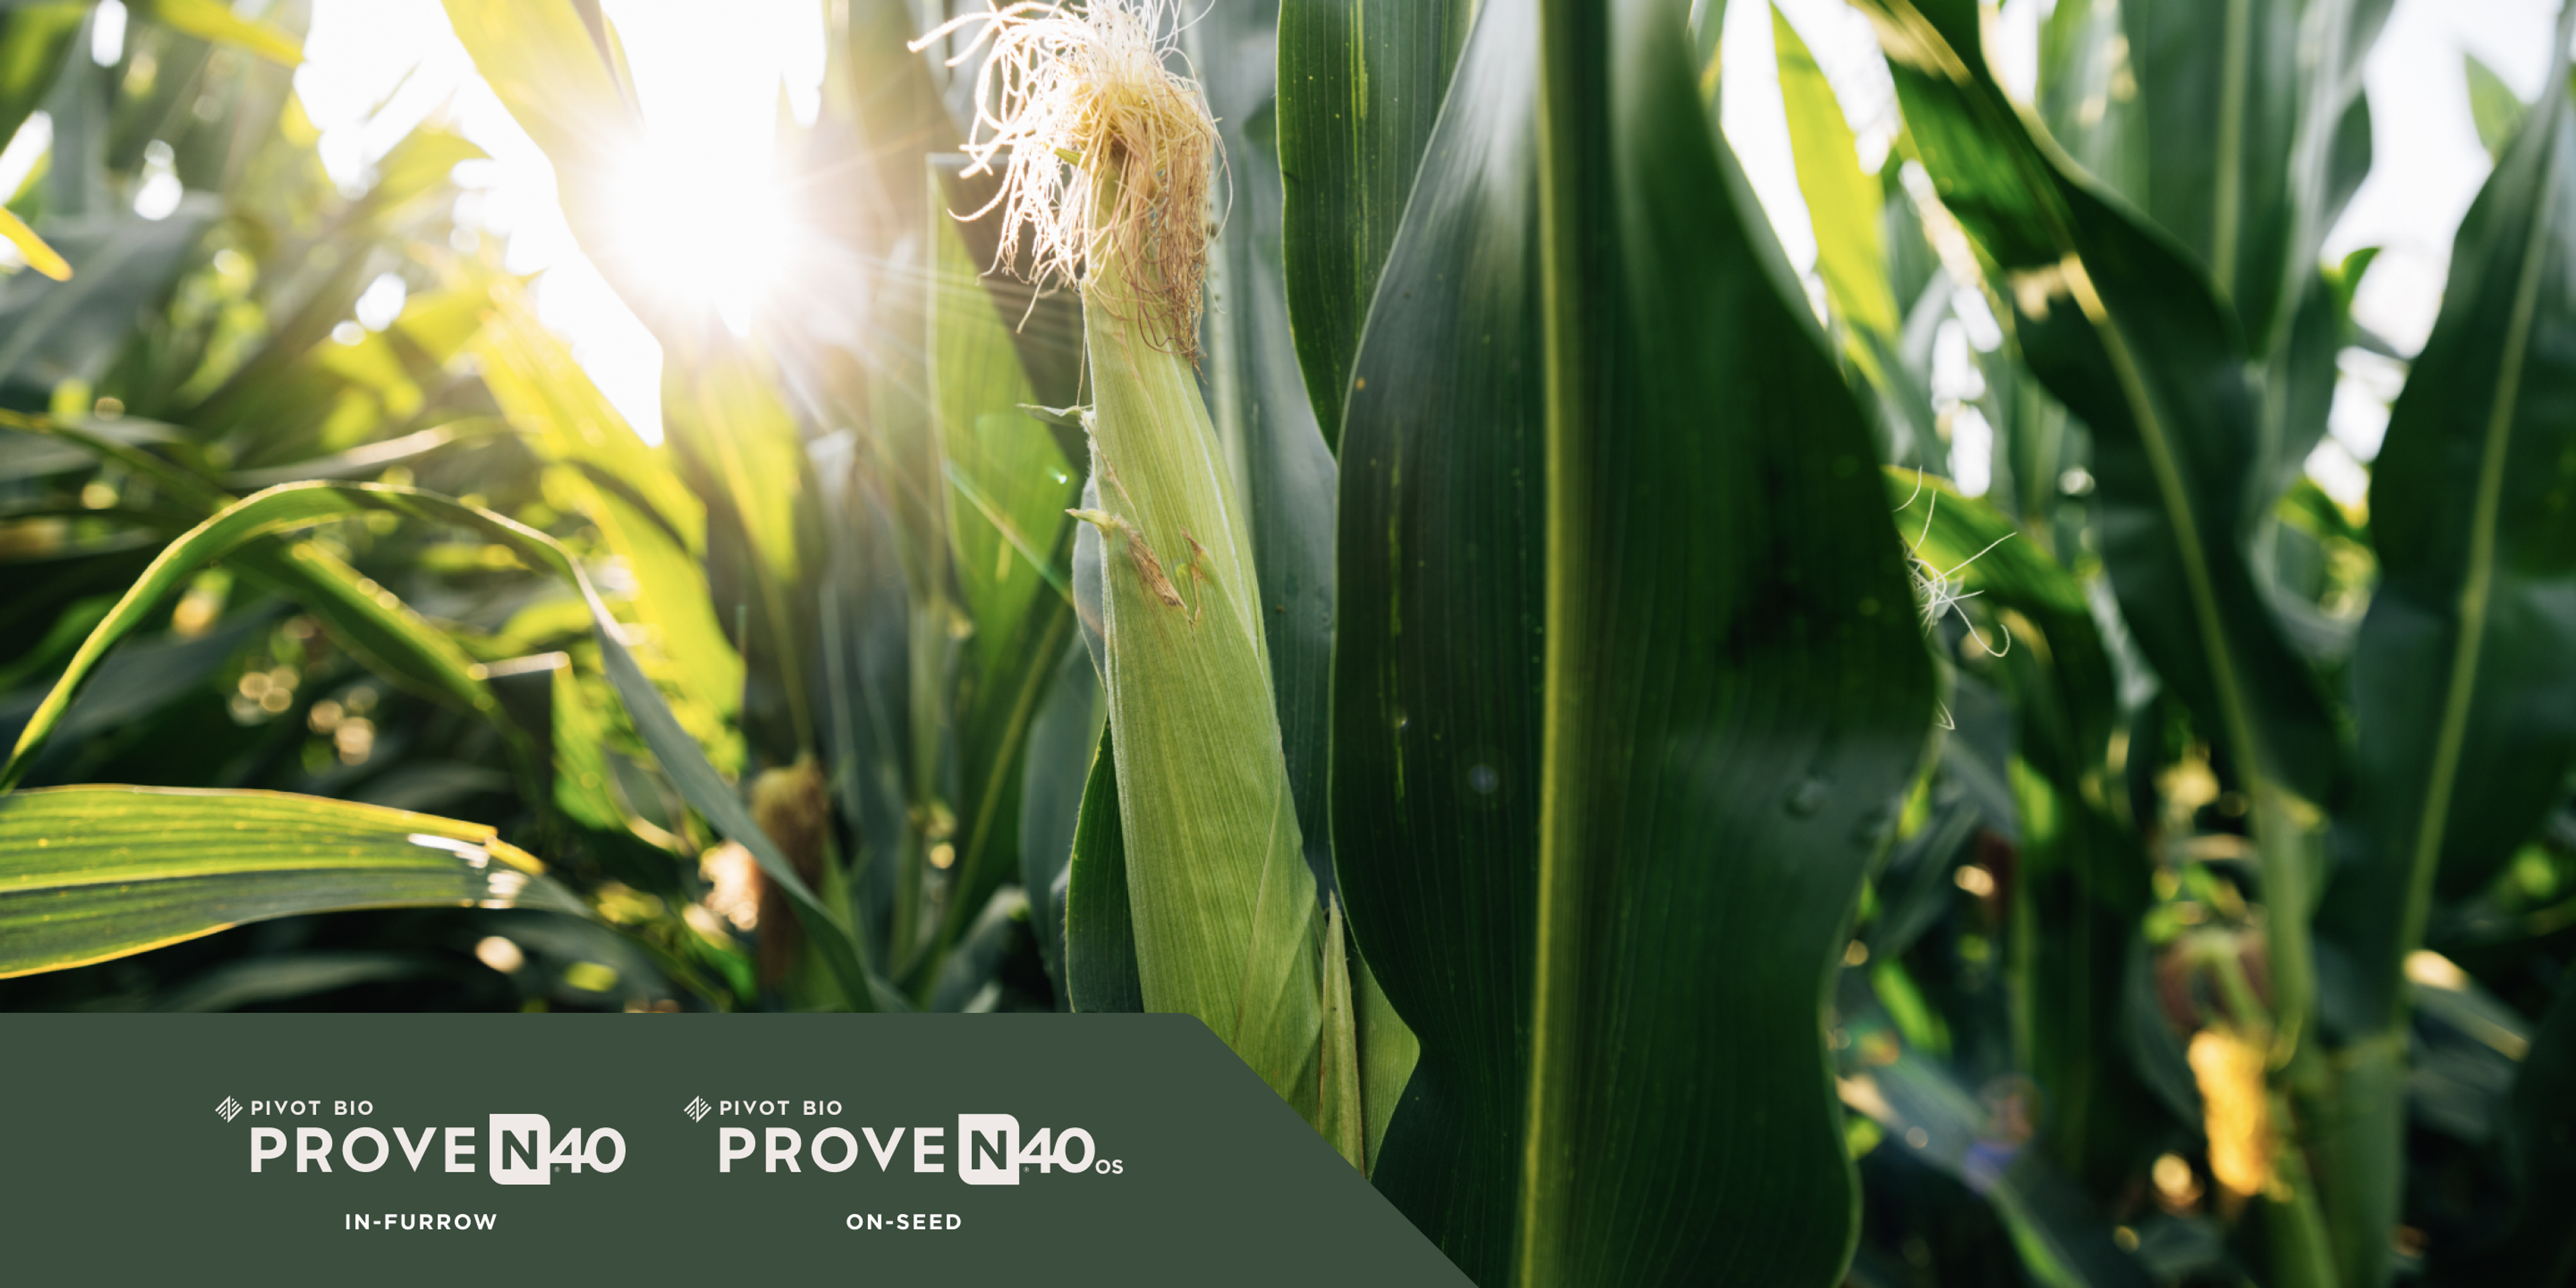 Photo of a Corn Crop with Pivot Bio Proven40 and Pivot Bio Proven 40 OS logos in the corner